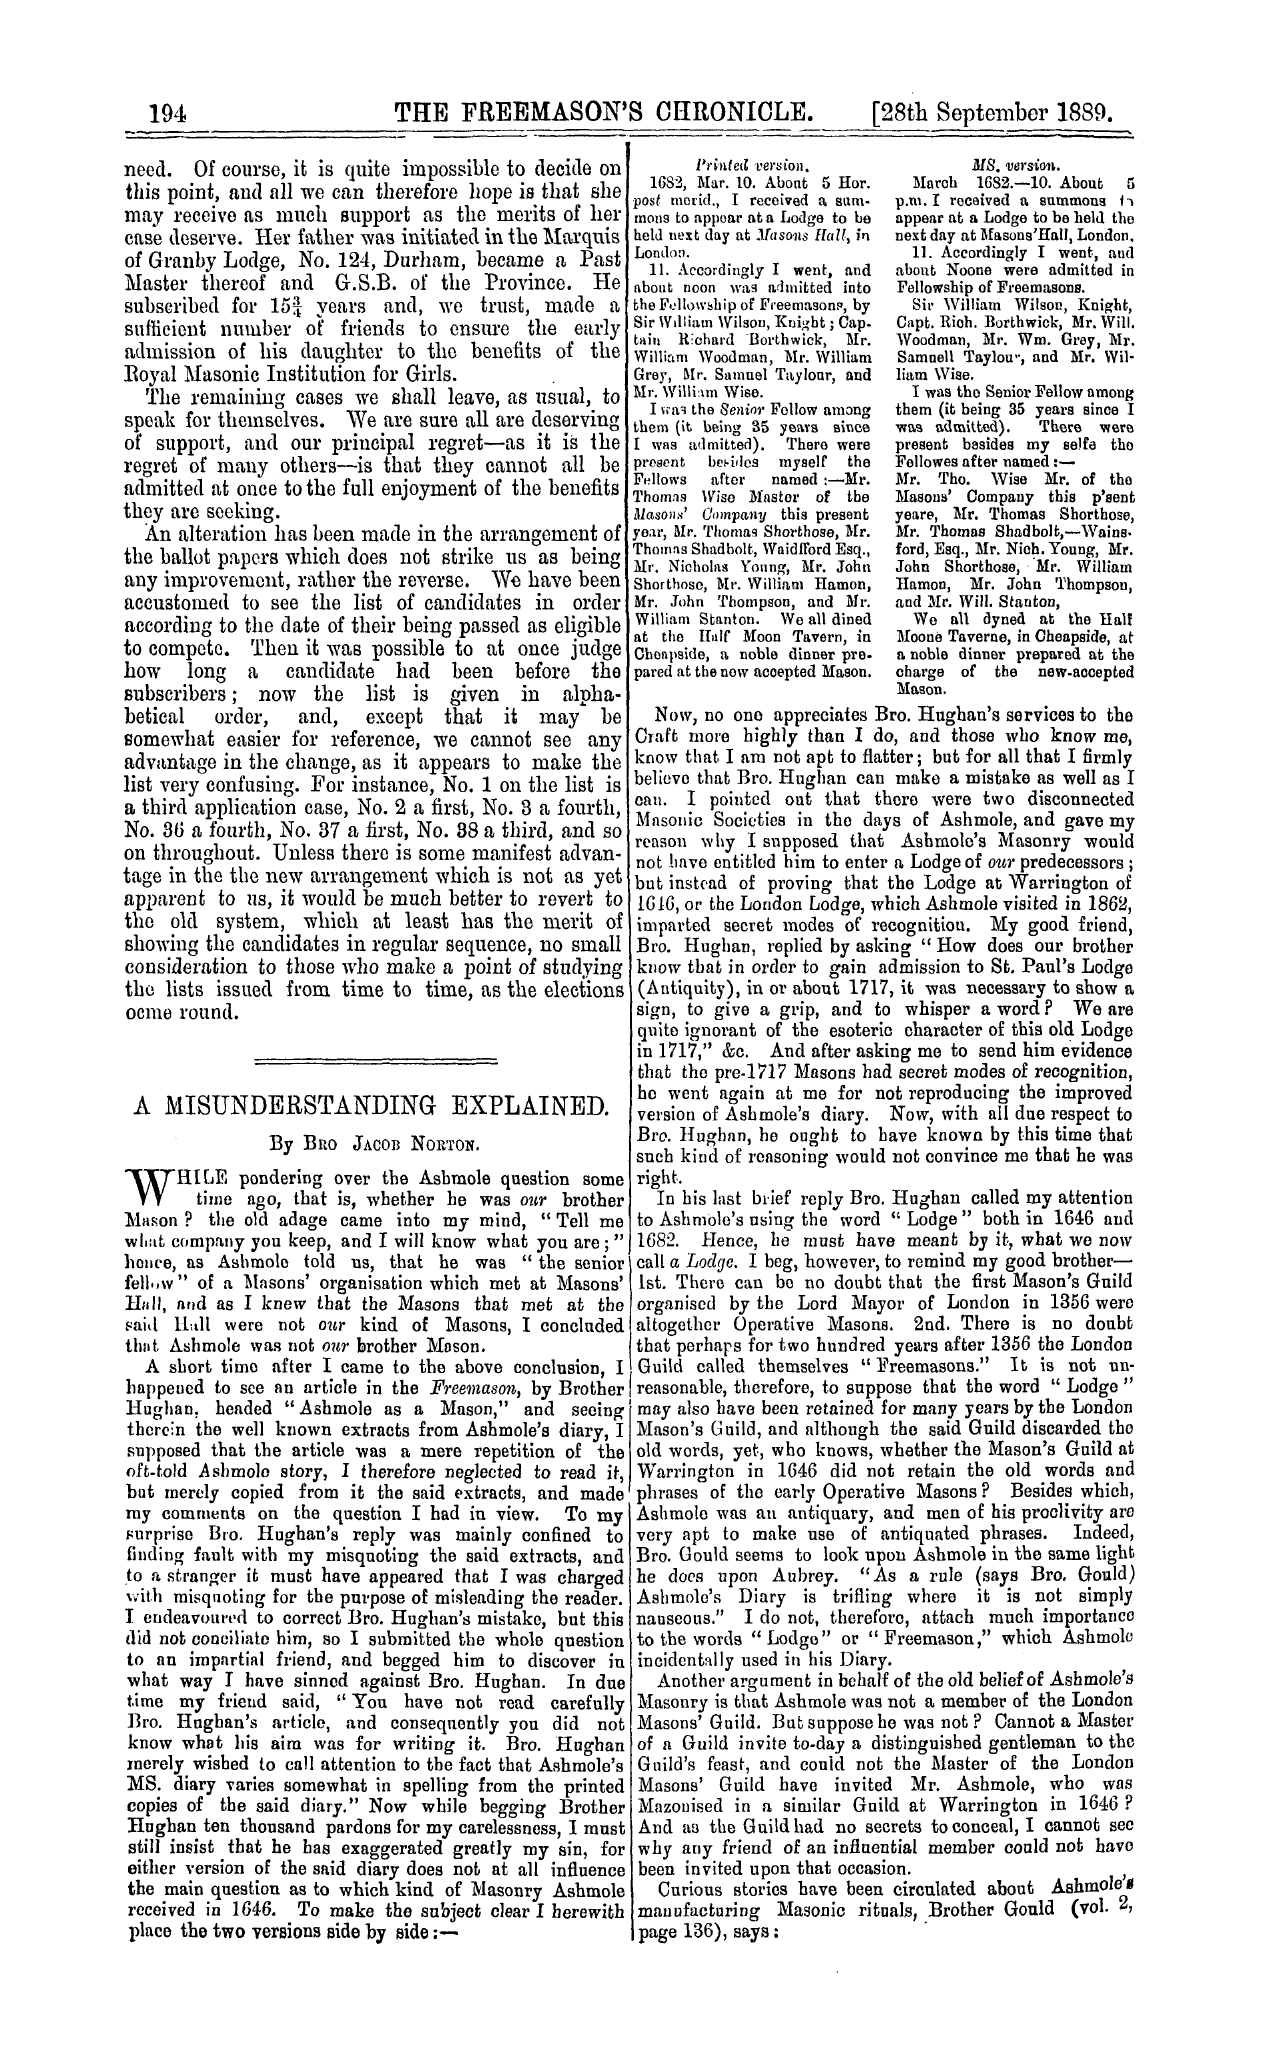 The Freemason's Chronicle: 1889-09-28: 2